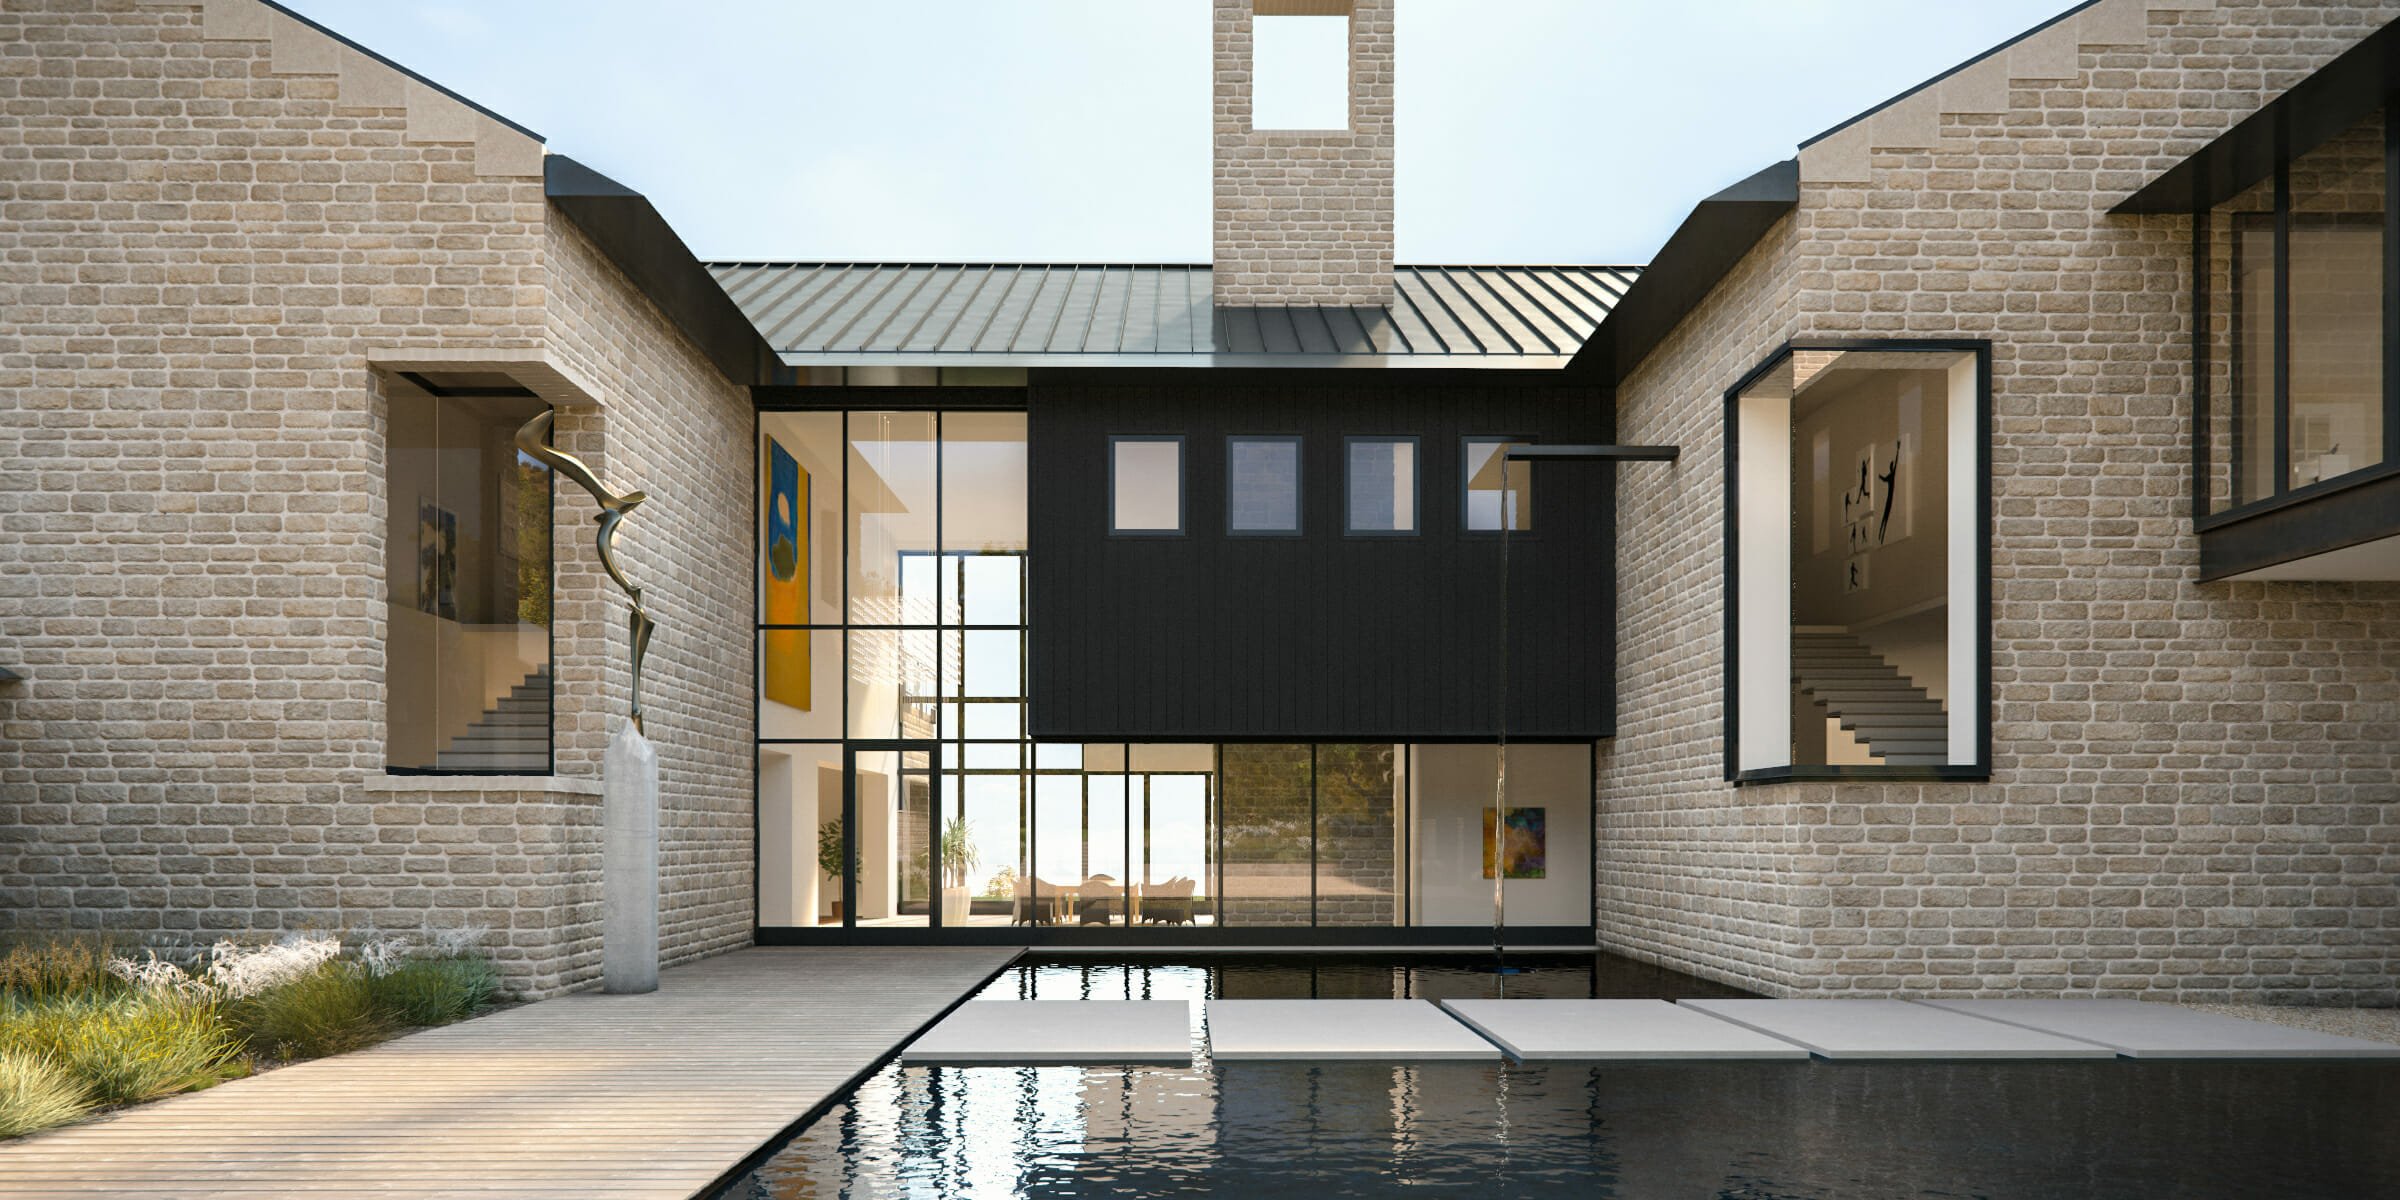 Home style quiz - modern exterior